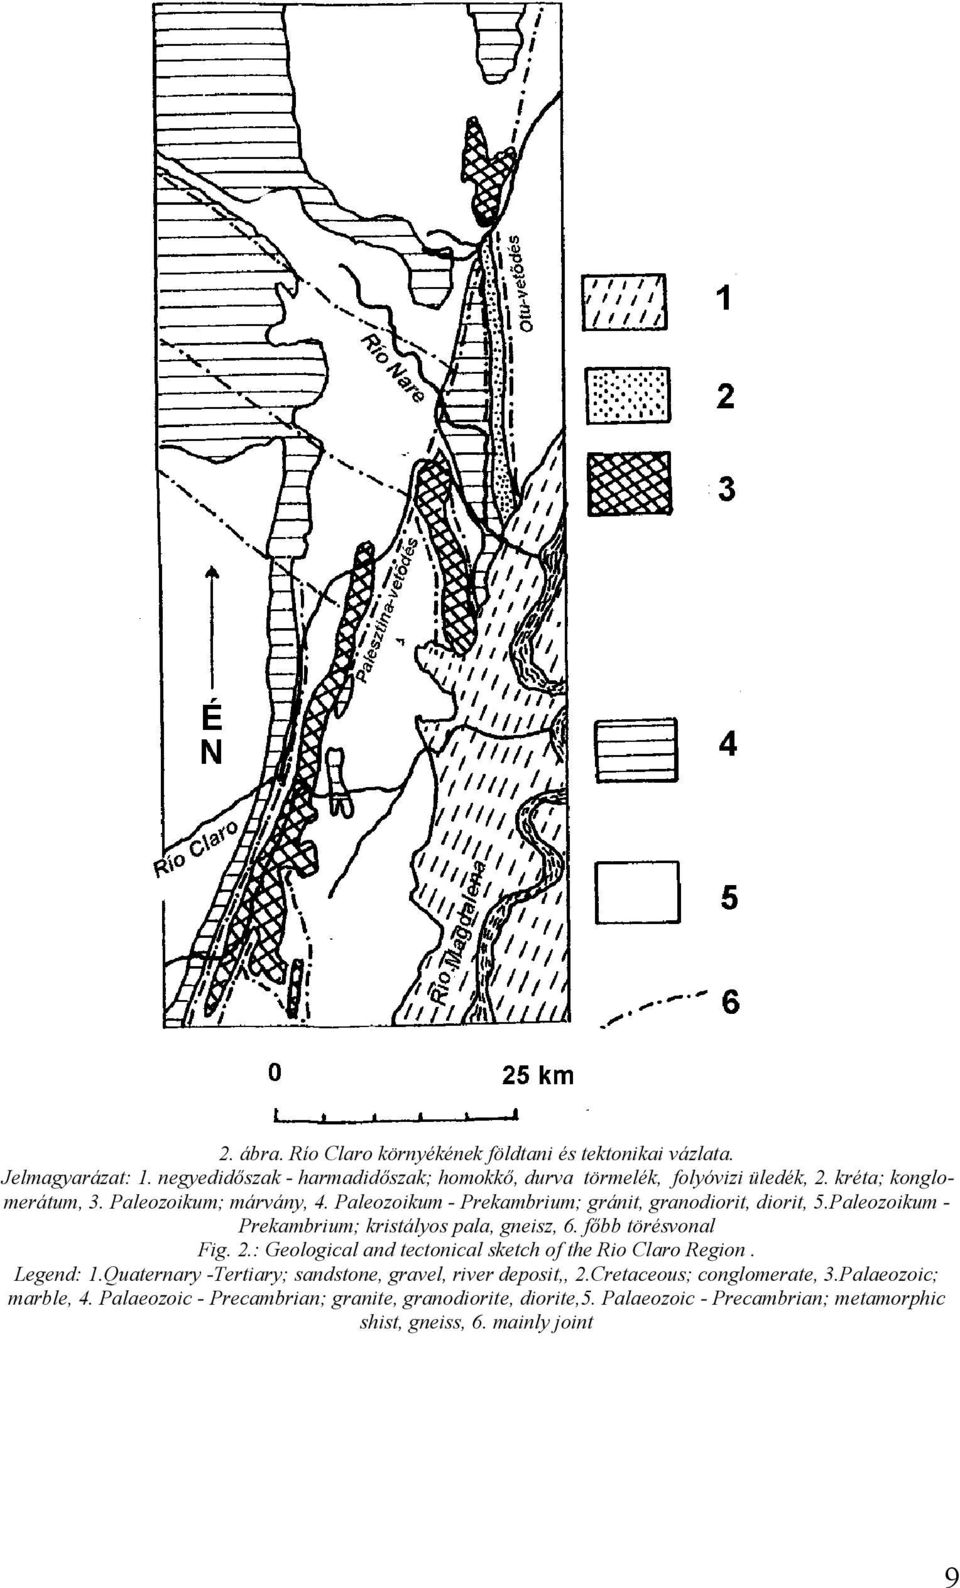 főbb törésvonal Fig. 2.: Geological and tectonical sketch of the Rio Claro Region. Legend: 1.Quaternary -Tertiary; sandstone, gravel, river deposit,, 2.